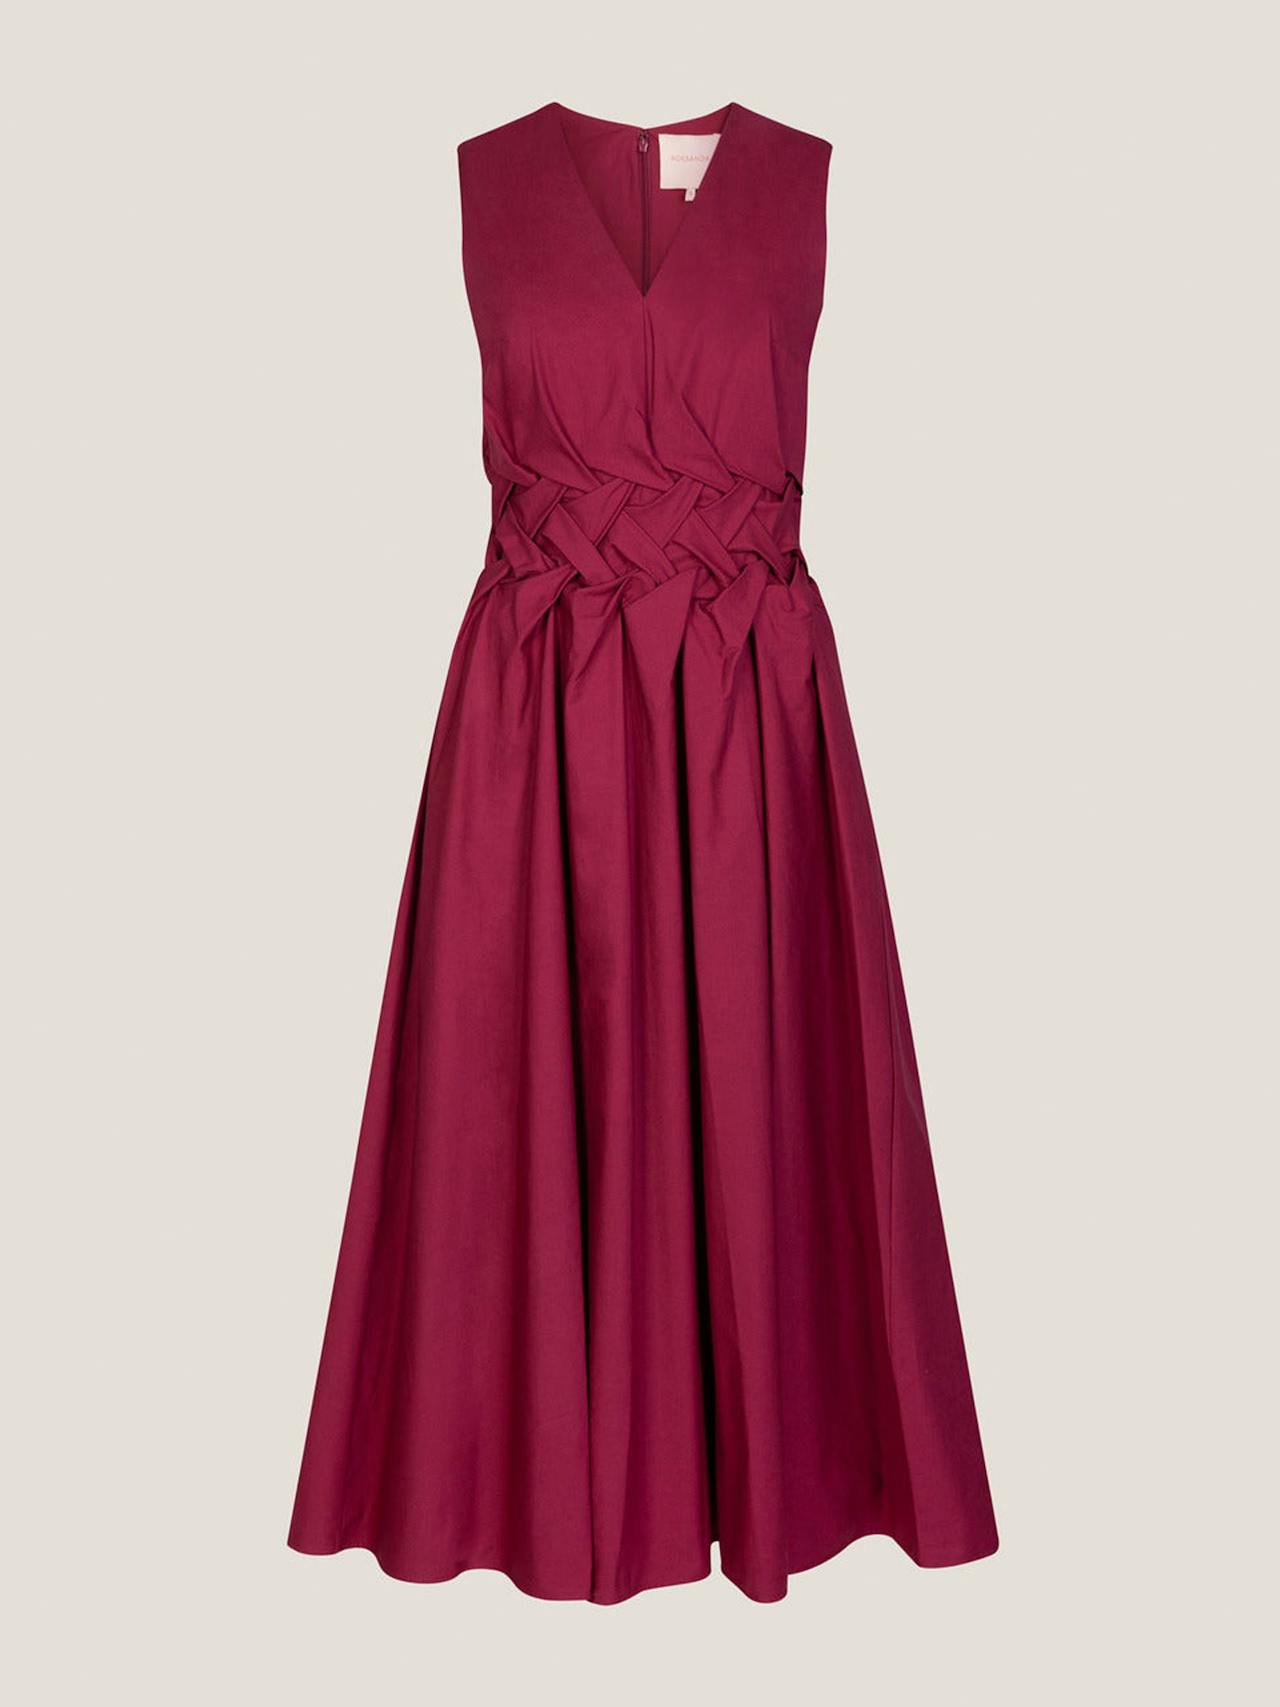 EIifal rosewood cotton dress